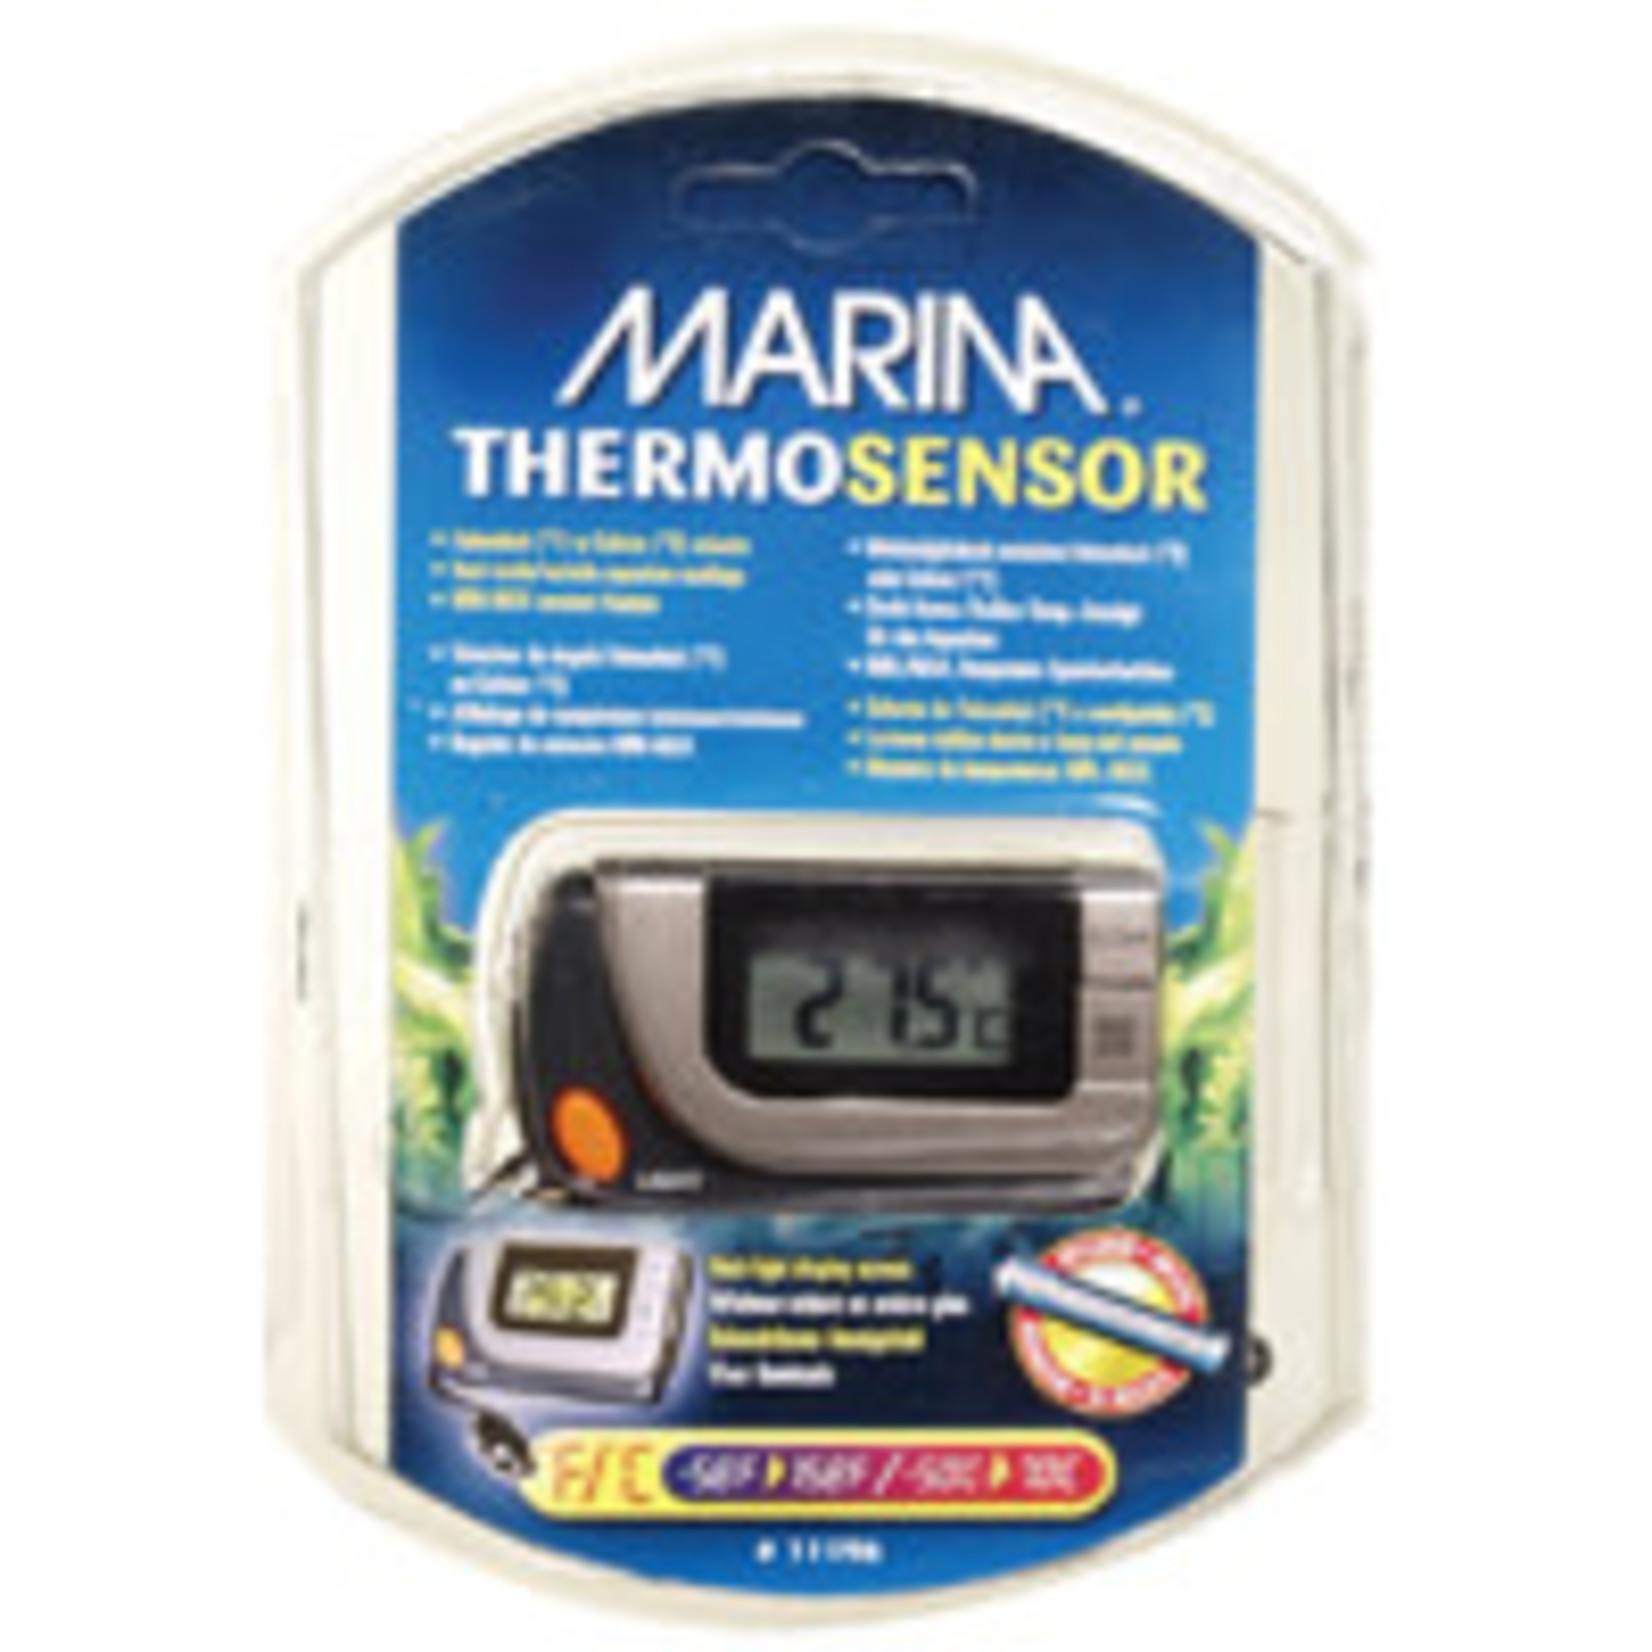 MARINA Marina Thermo Sensor Inside/Outside Thermometer with Memory